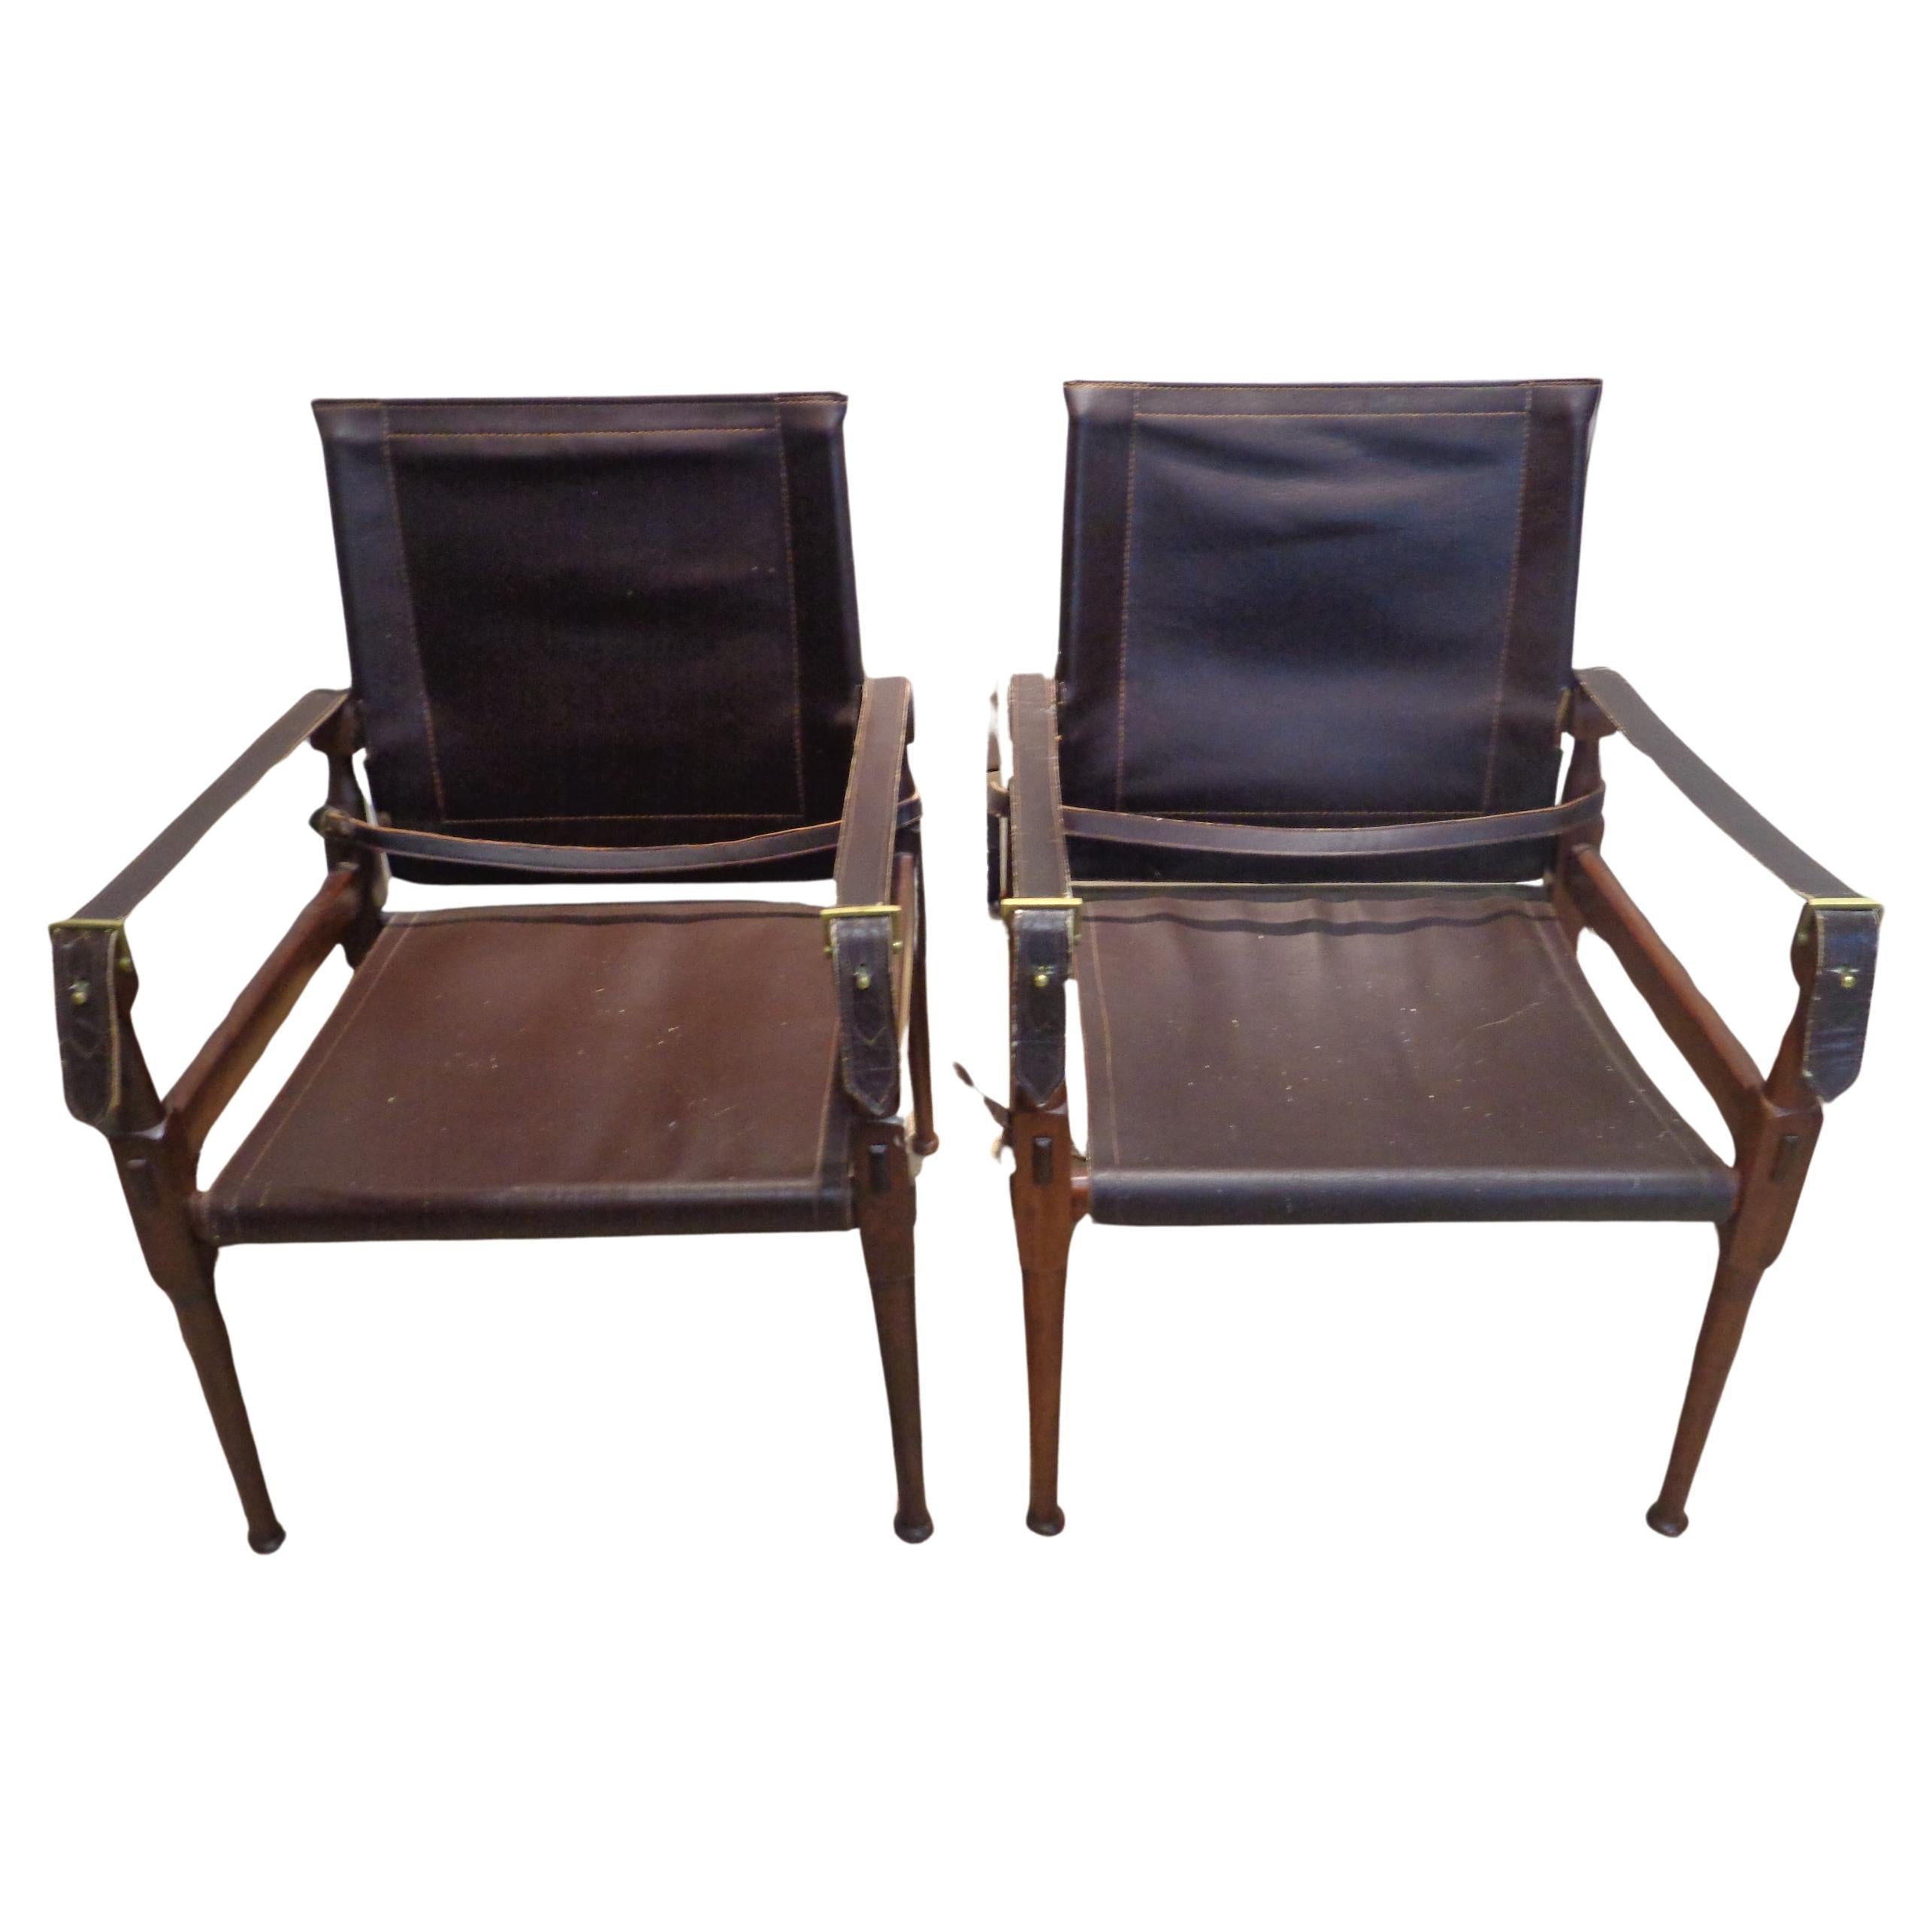 Pakistani  Campaign Style Safari Chairs, M. Hayat & Bros. 1960-1970 For Sale